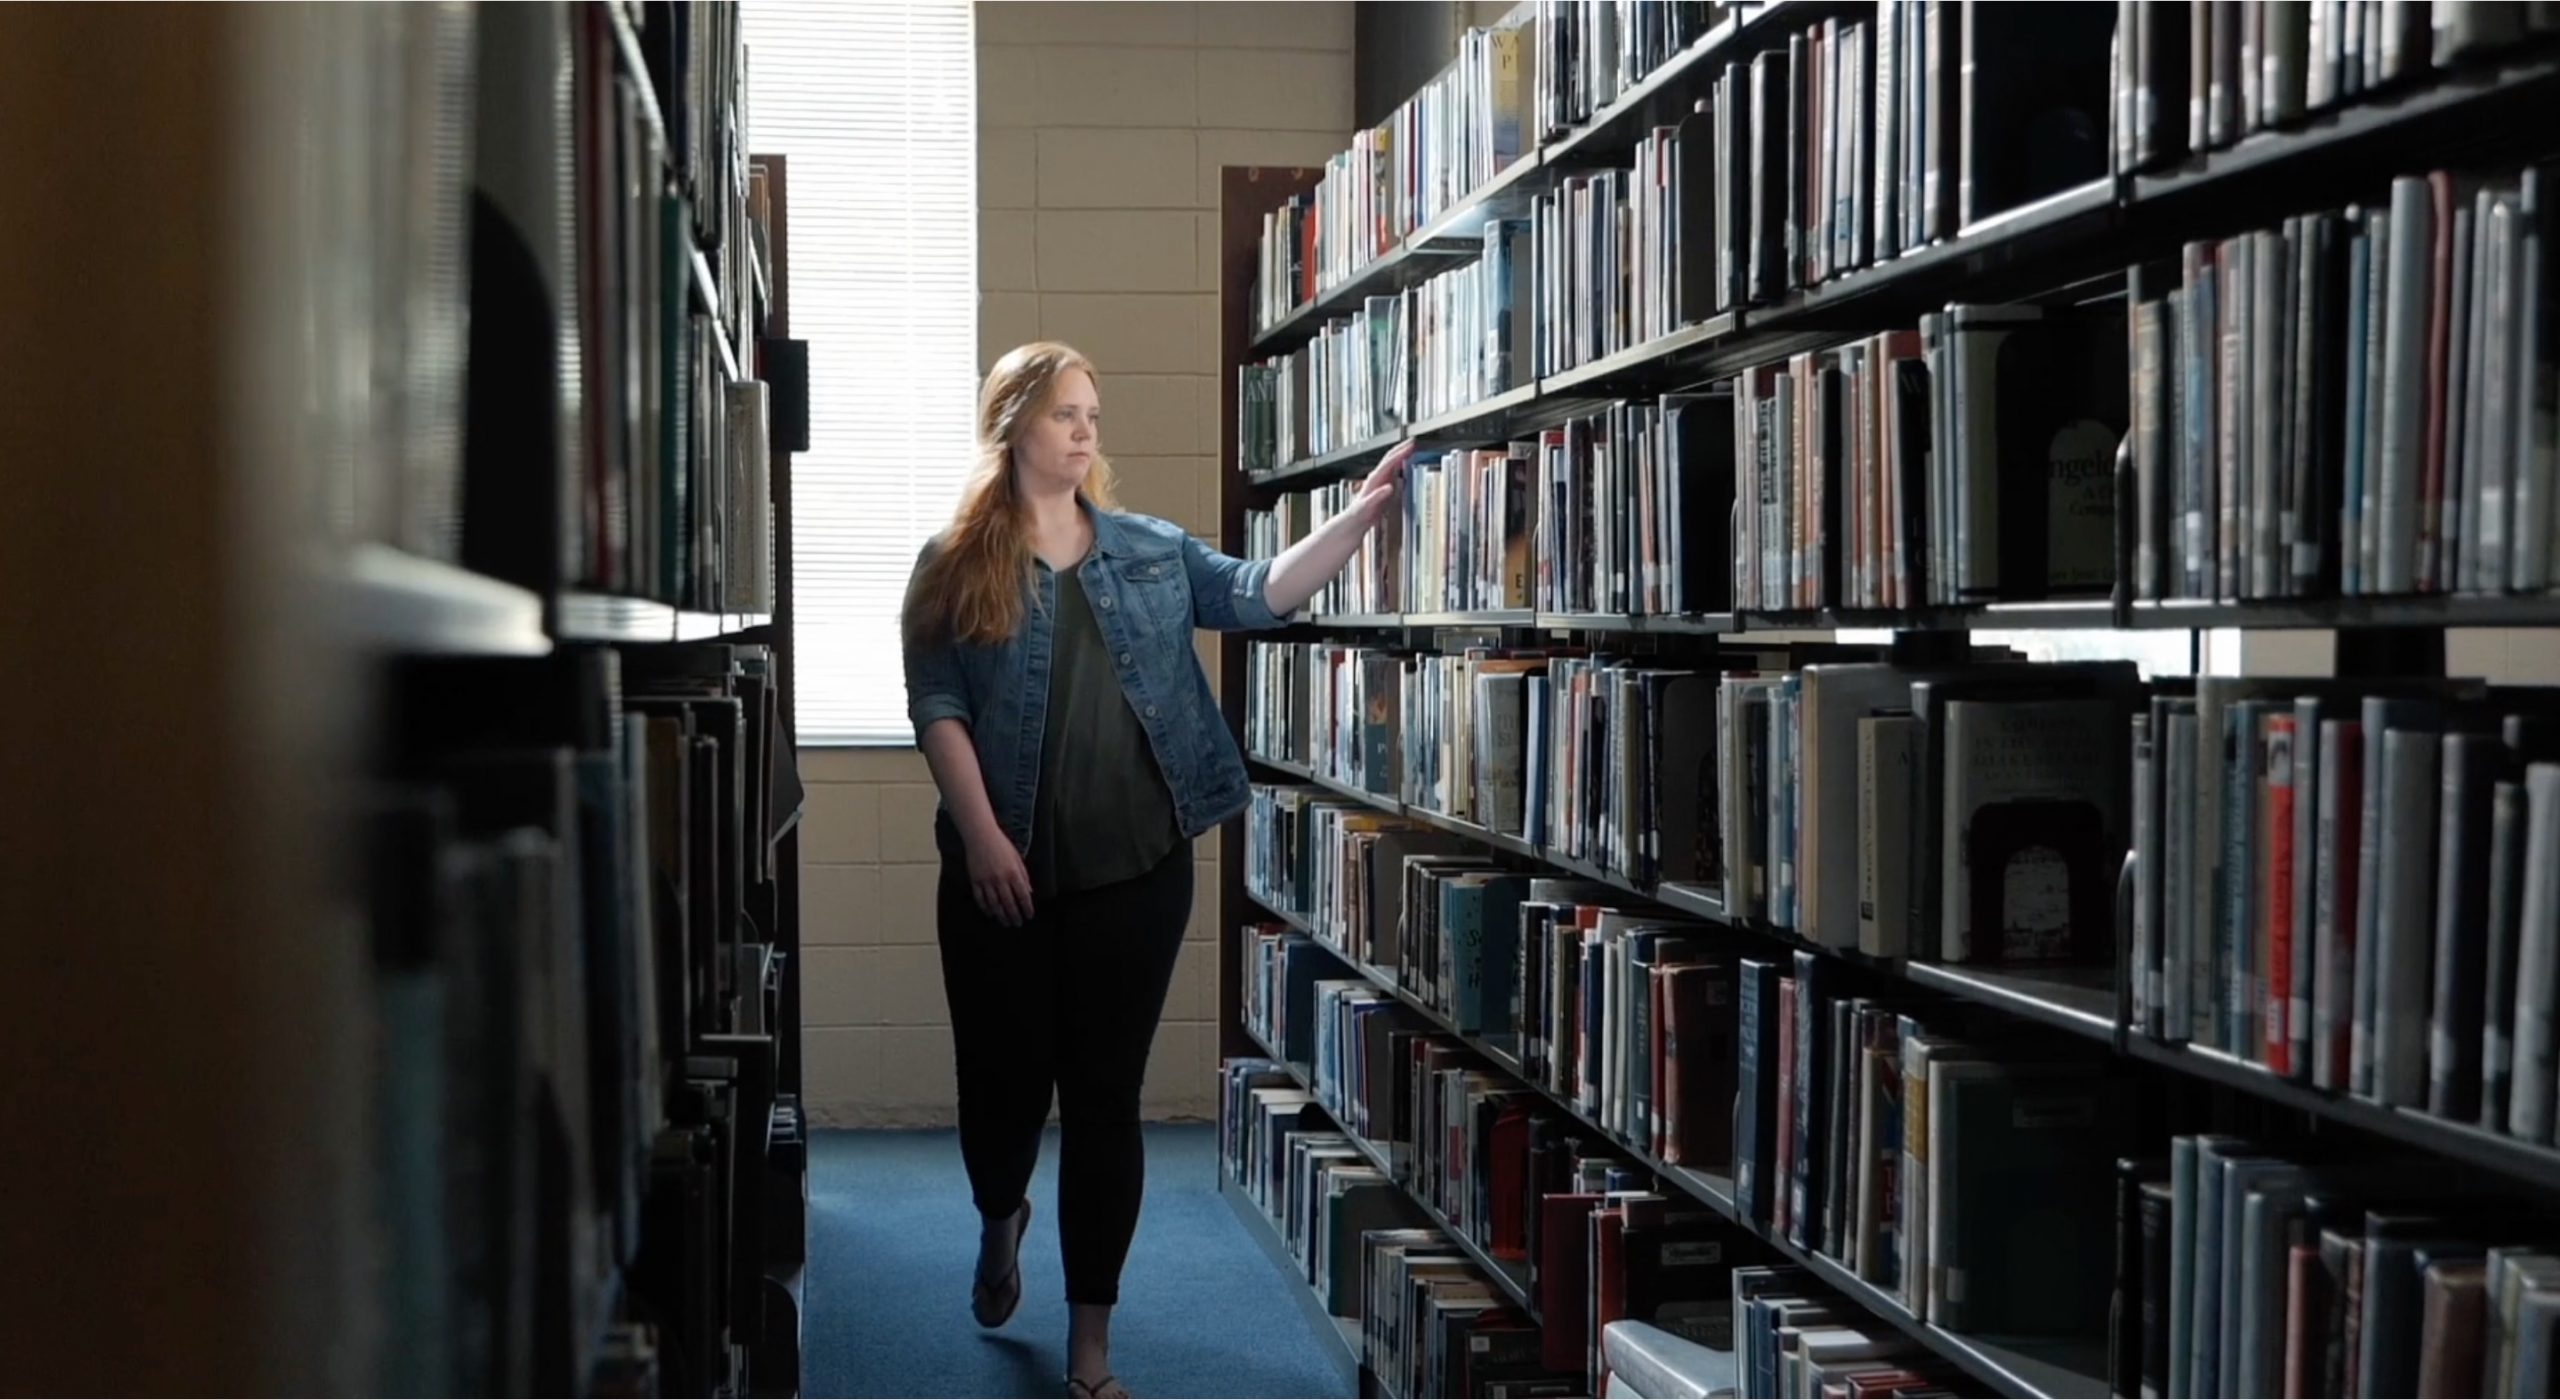 Young woman walking through library bookshelves